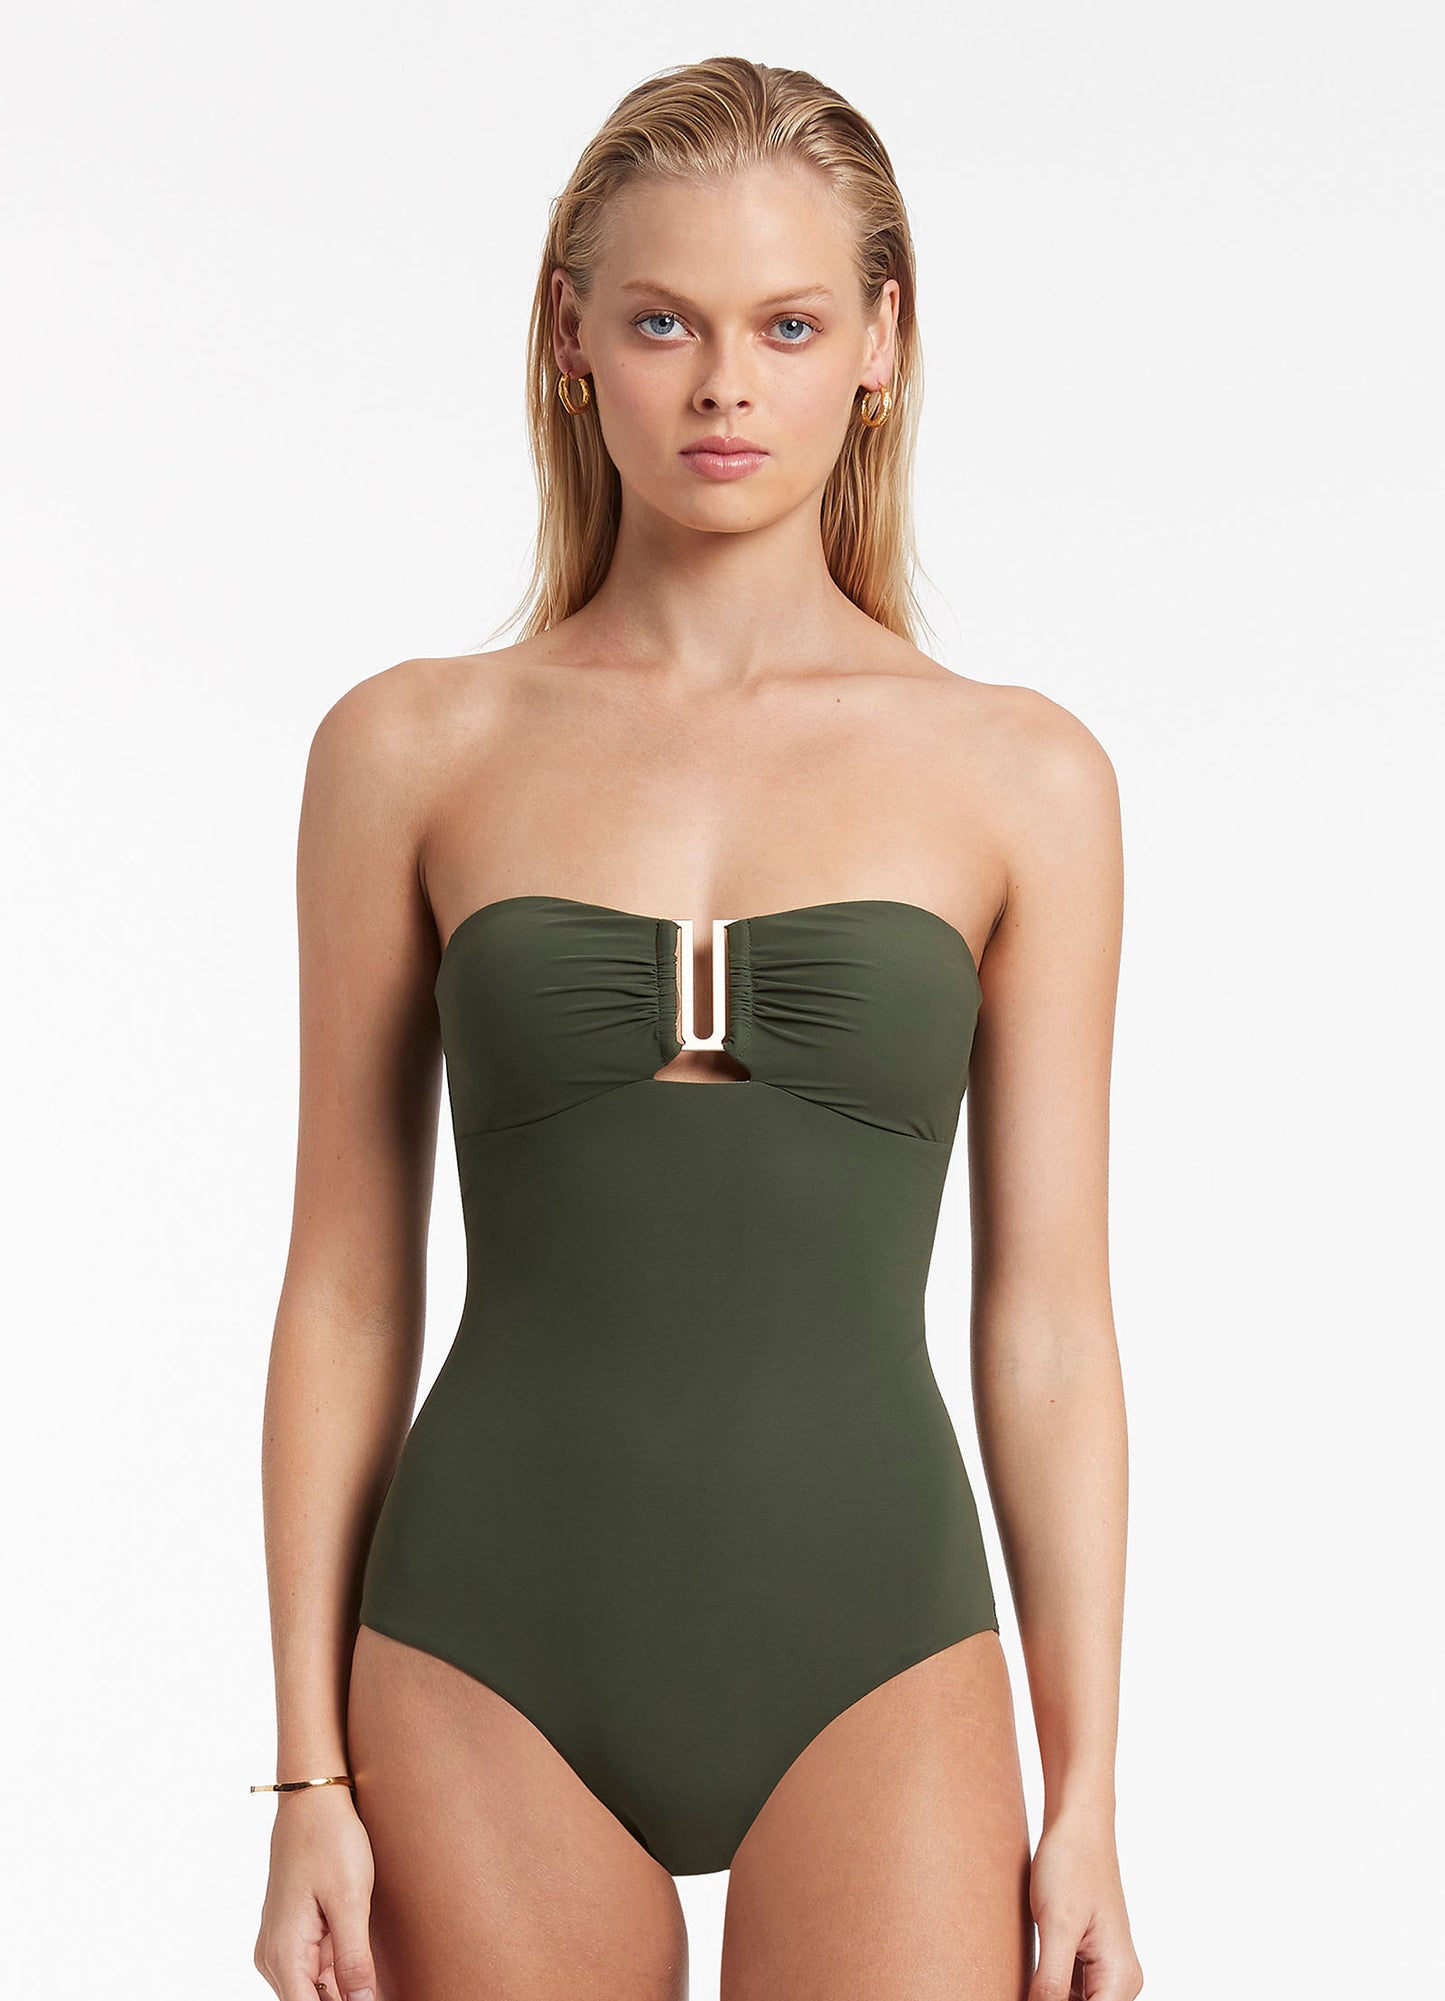 Bandeau Swimsuit Jets Swimwear in Olive color